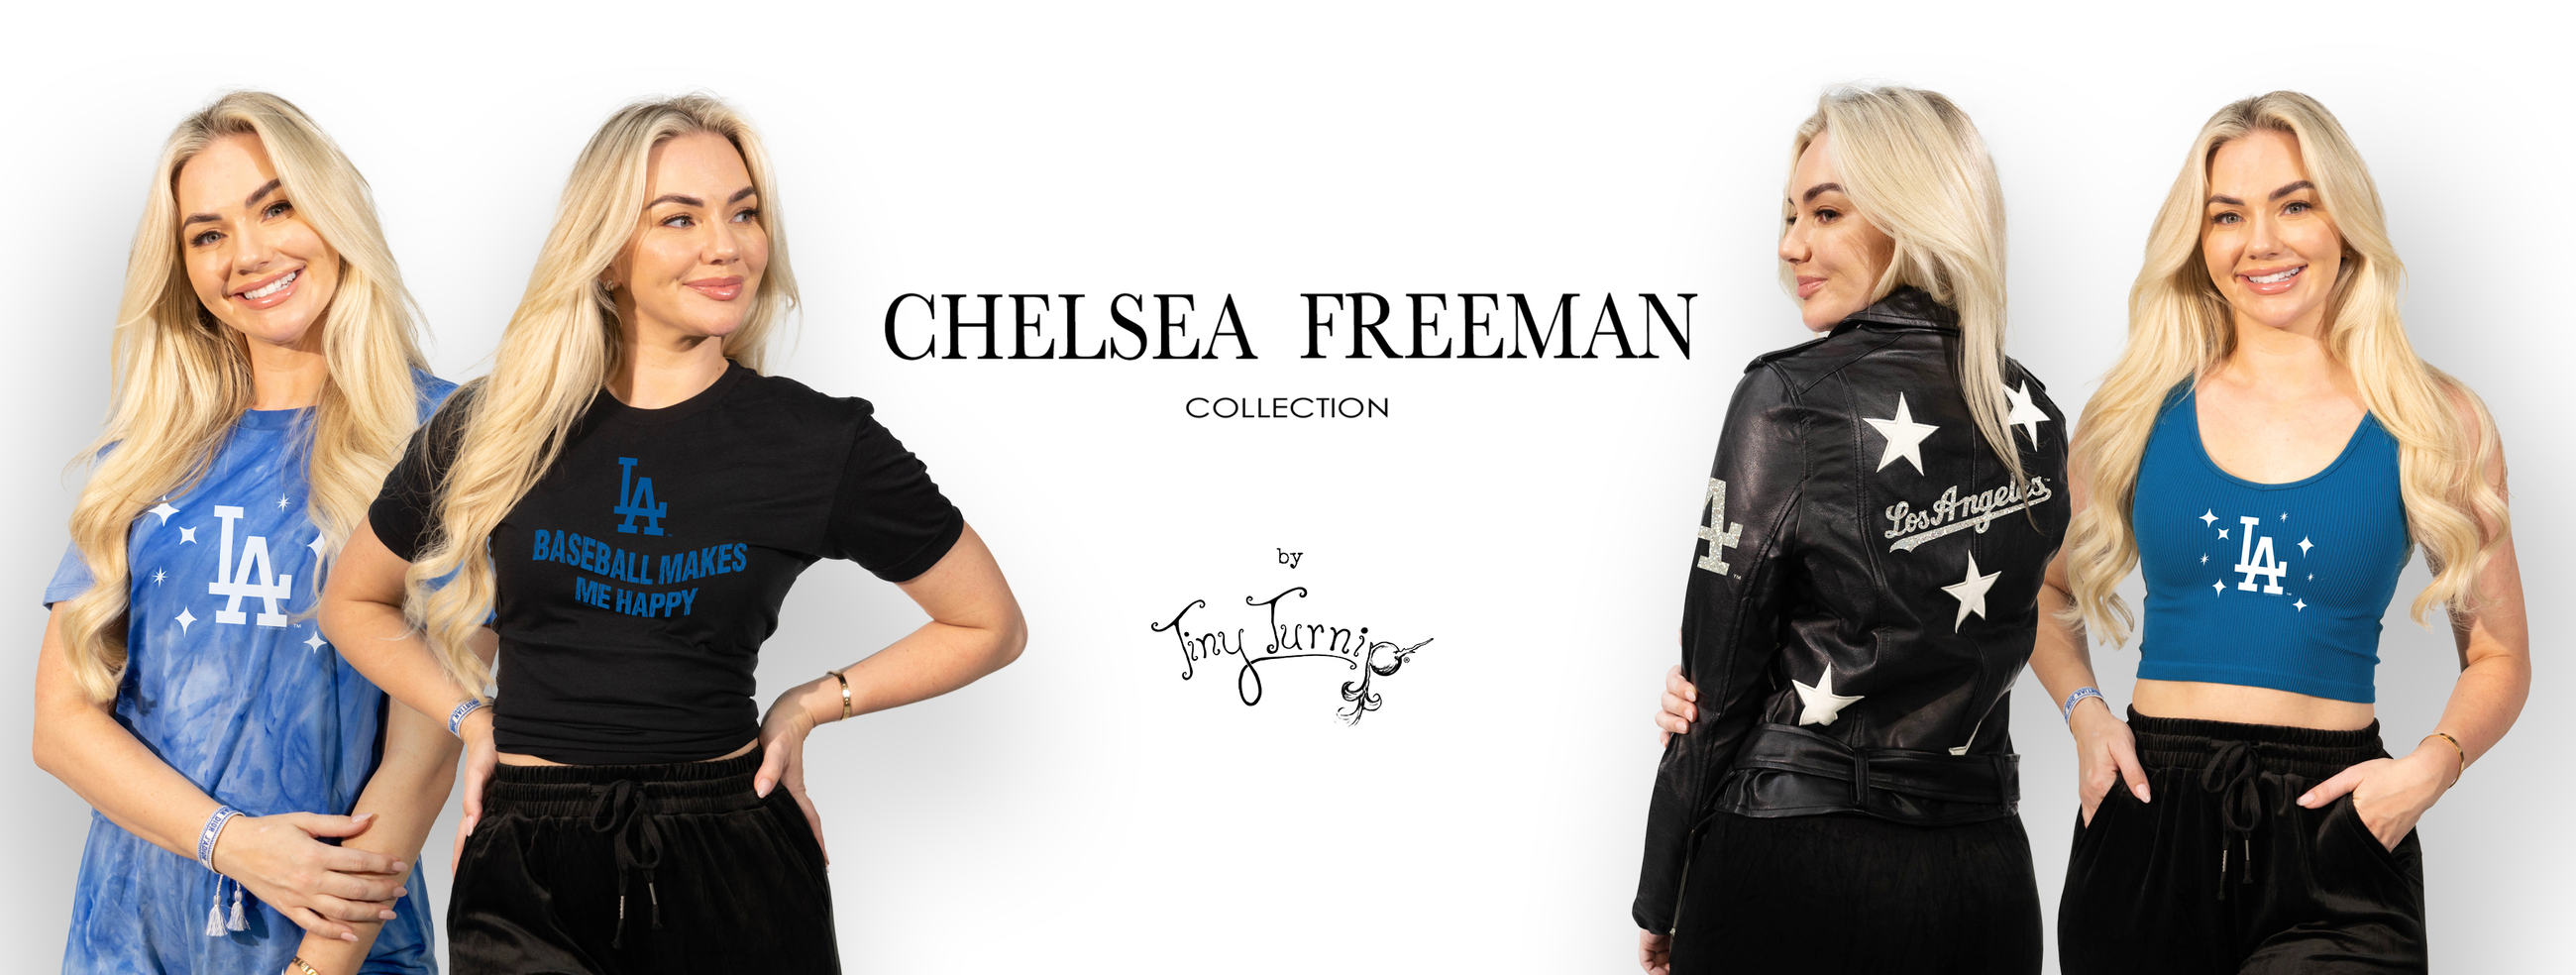 Chelsea Freeman Collection